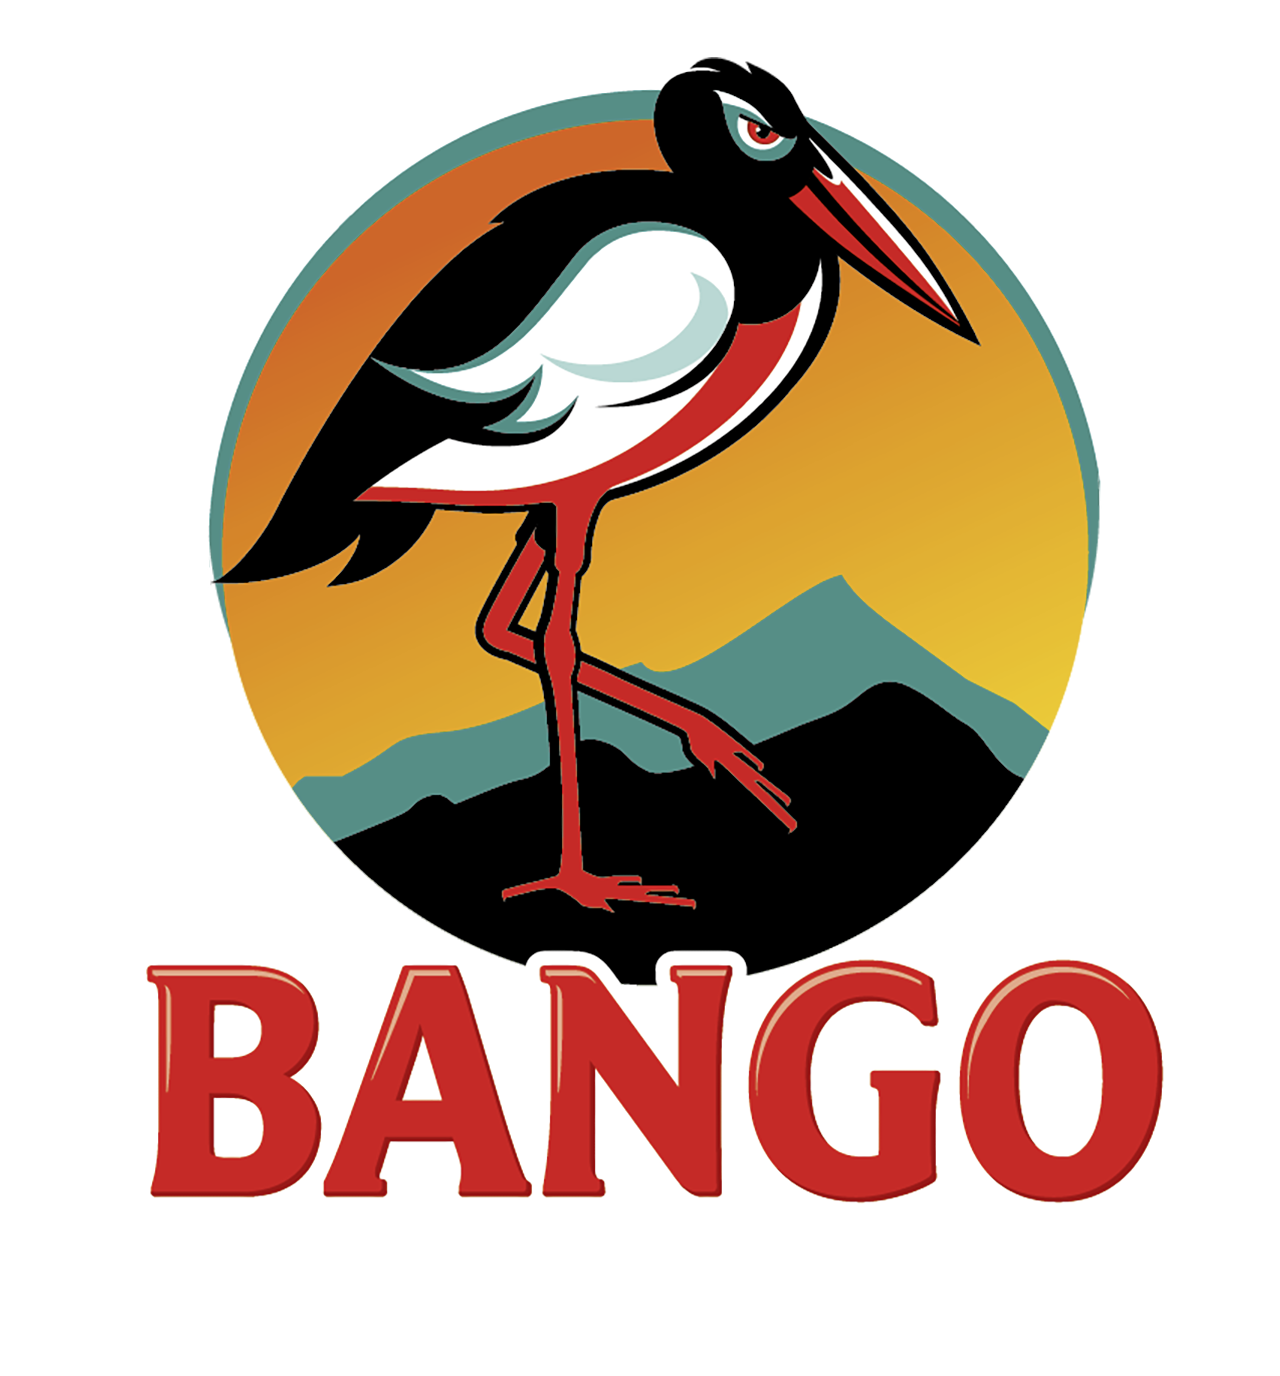 Bango Logo